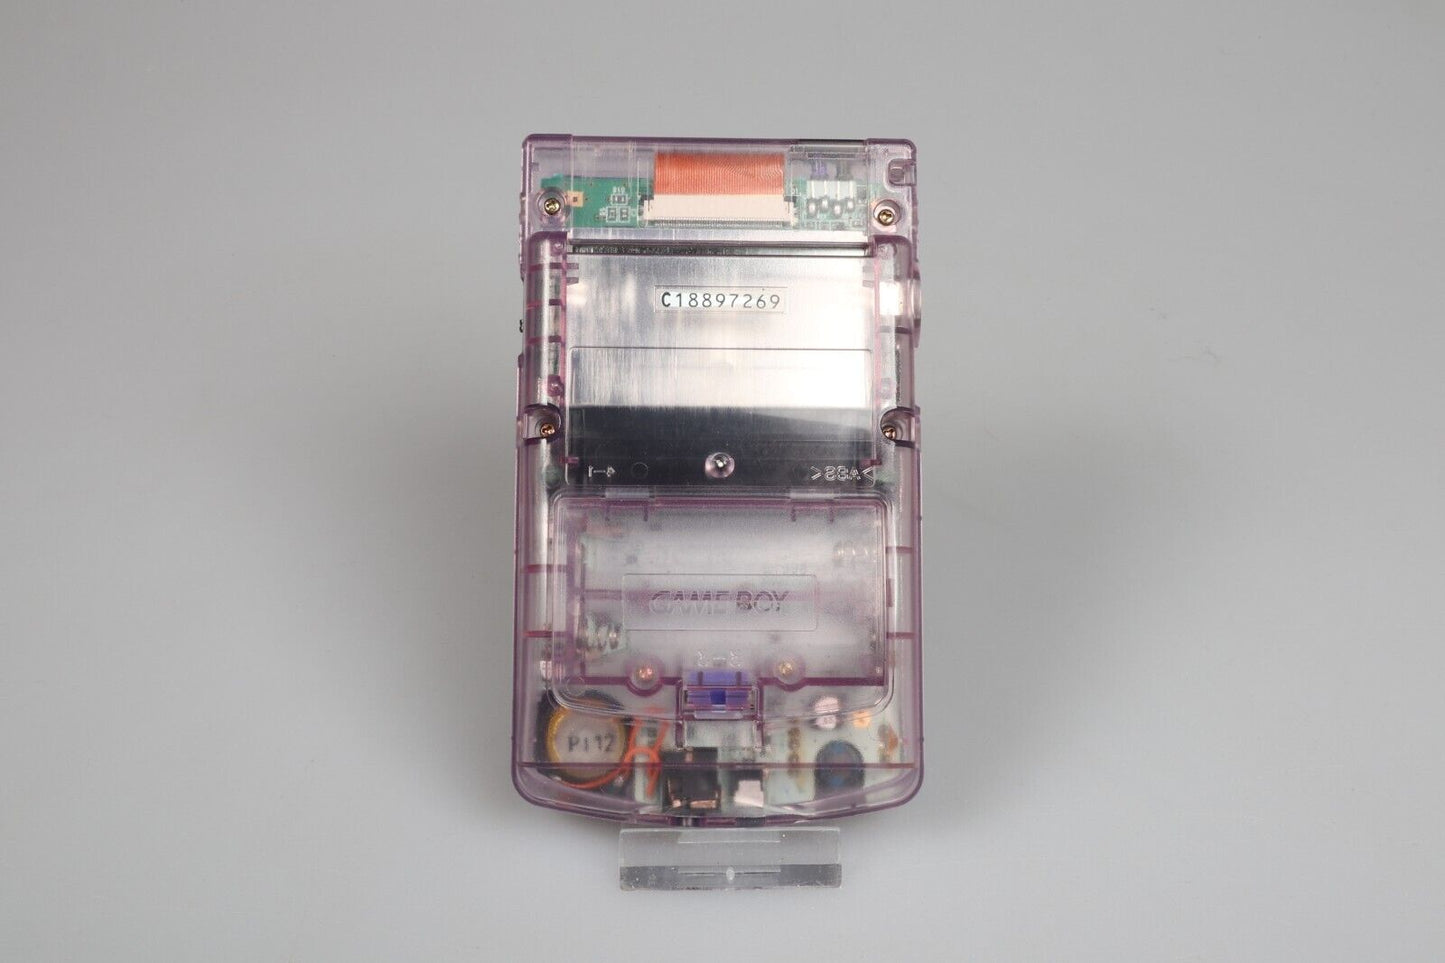 Gameboy Color | CGB-001 Transparent Handheld | Atomic Purple